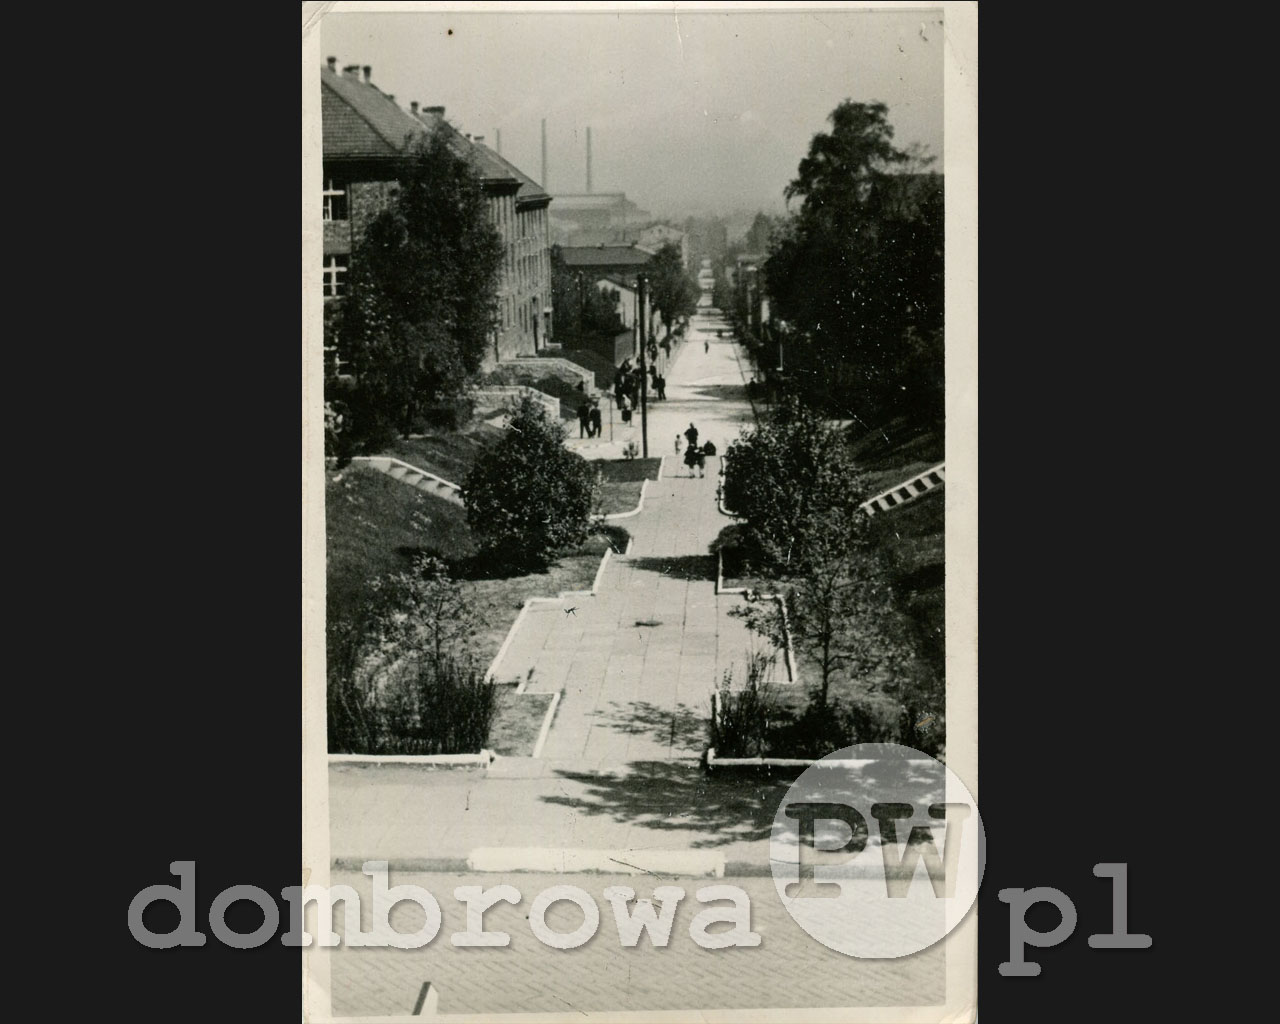 1940 r. Dombrowa O-S, Kreis Bendsburg - Rathausstrasse (Graphochemie)